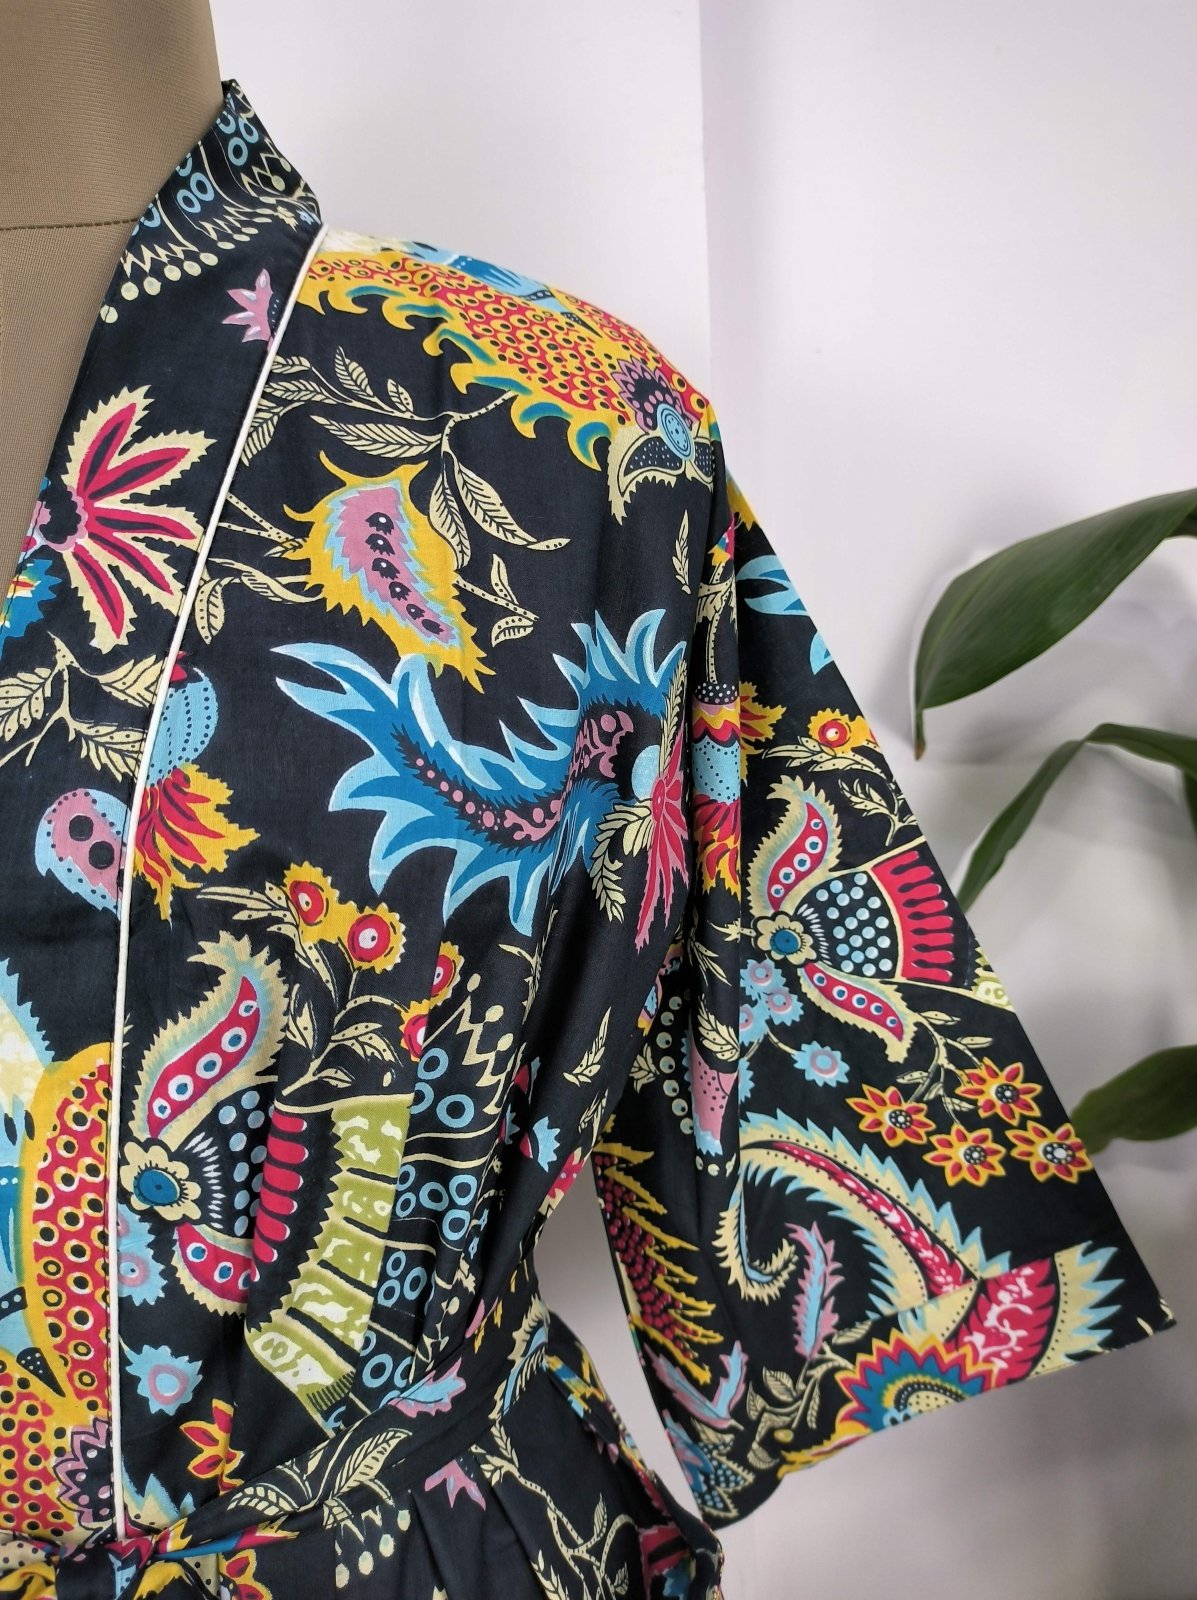 Boho Cotton Kimono House Robe Indian Handprinted Pink Night Jungle Theme | Lightweight Summer Luxury Beach Holiday Cover Up Stunning Dress - The Eastern Loom